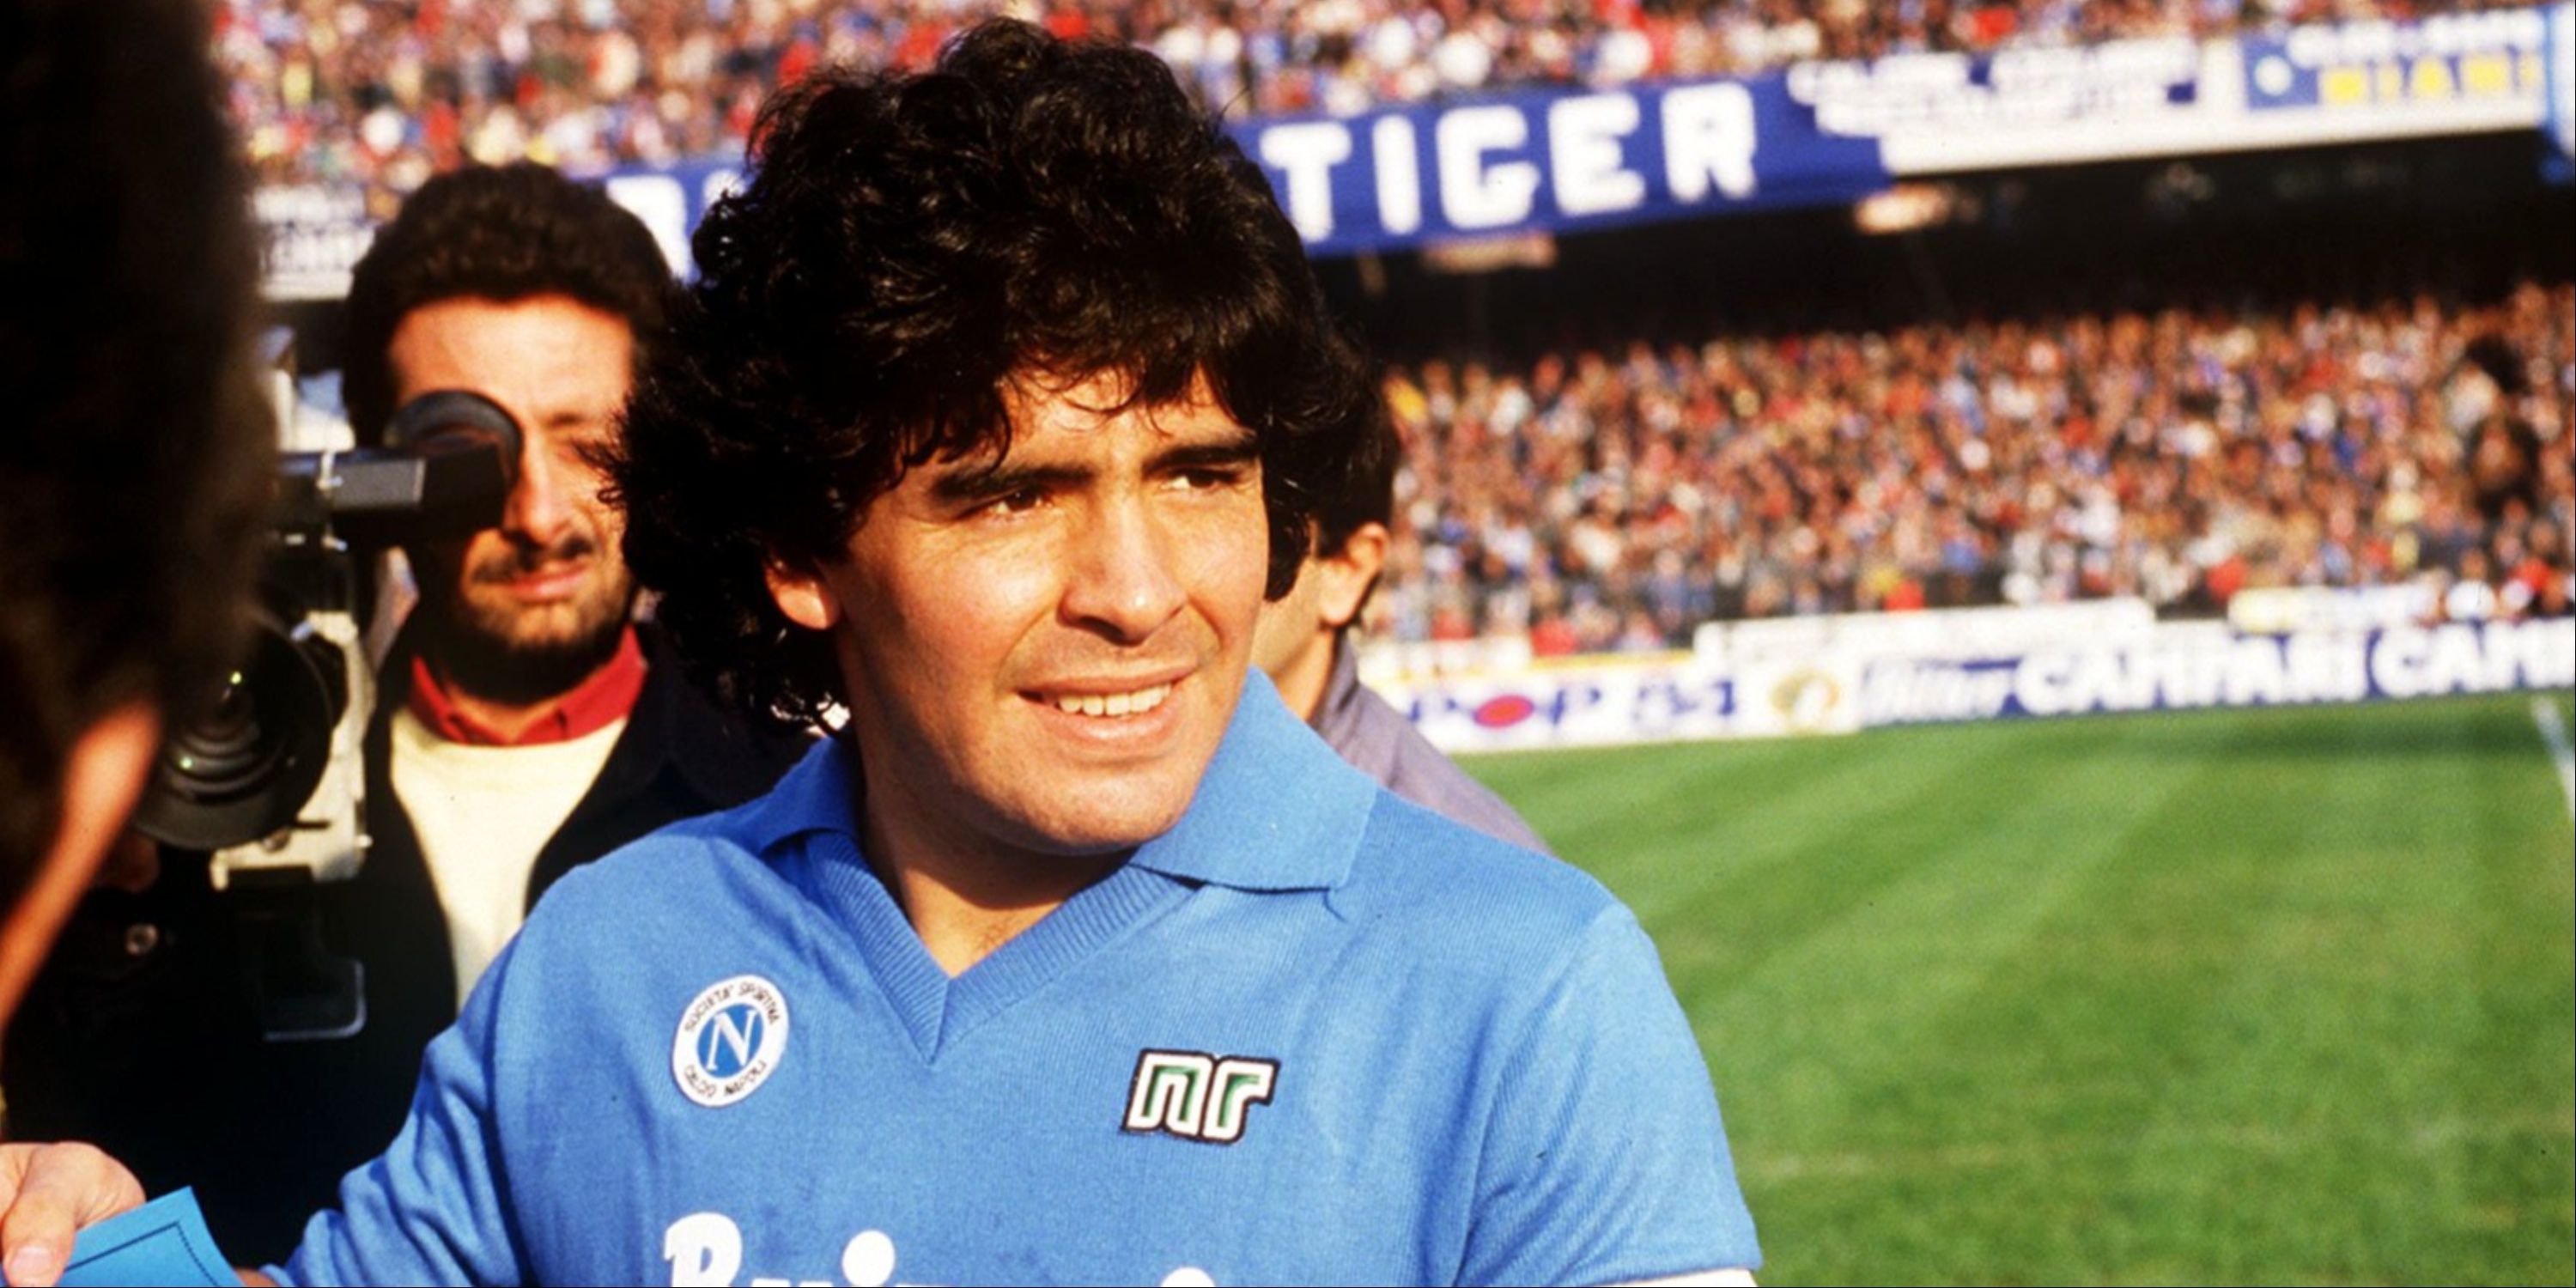 Diego Maradona in action for Napoli. 